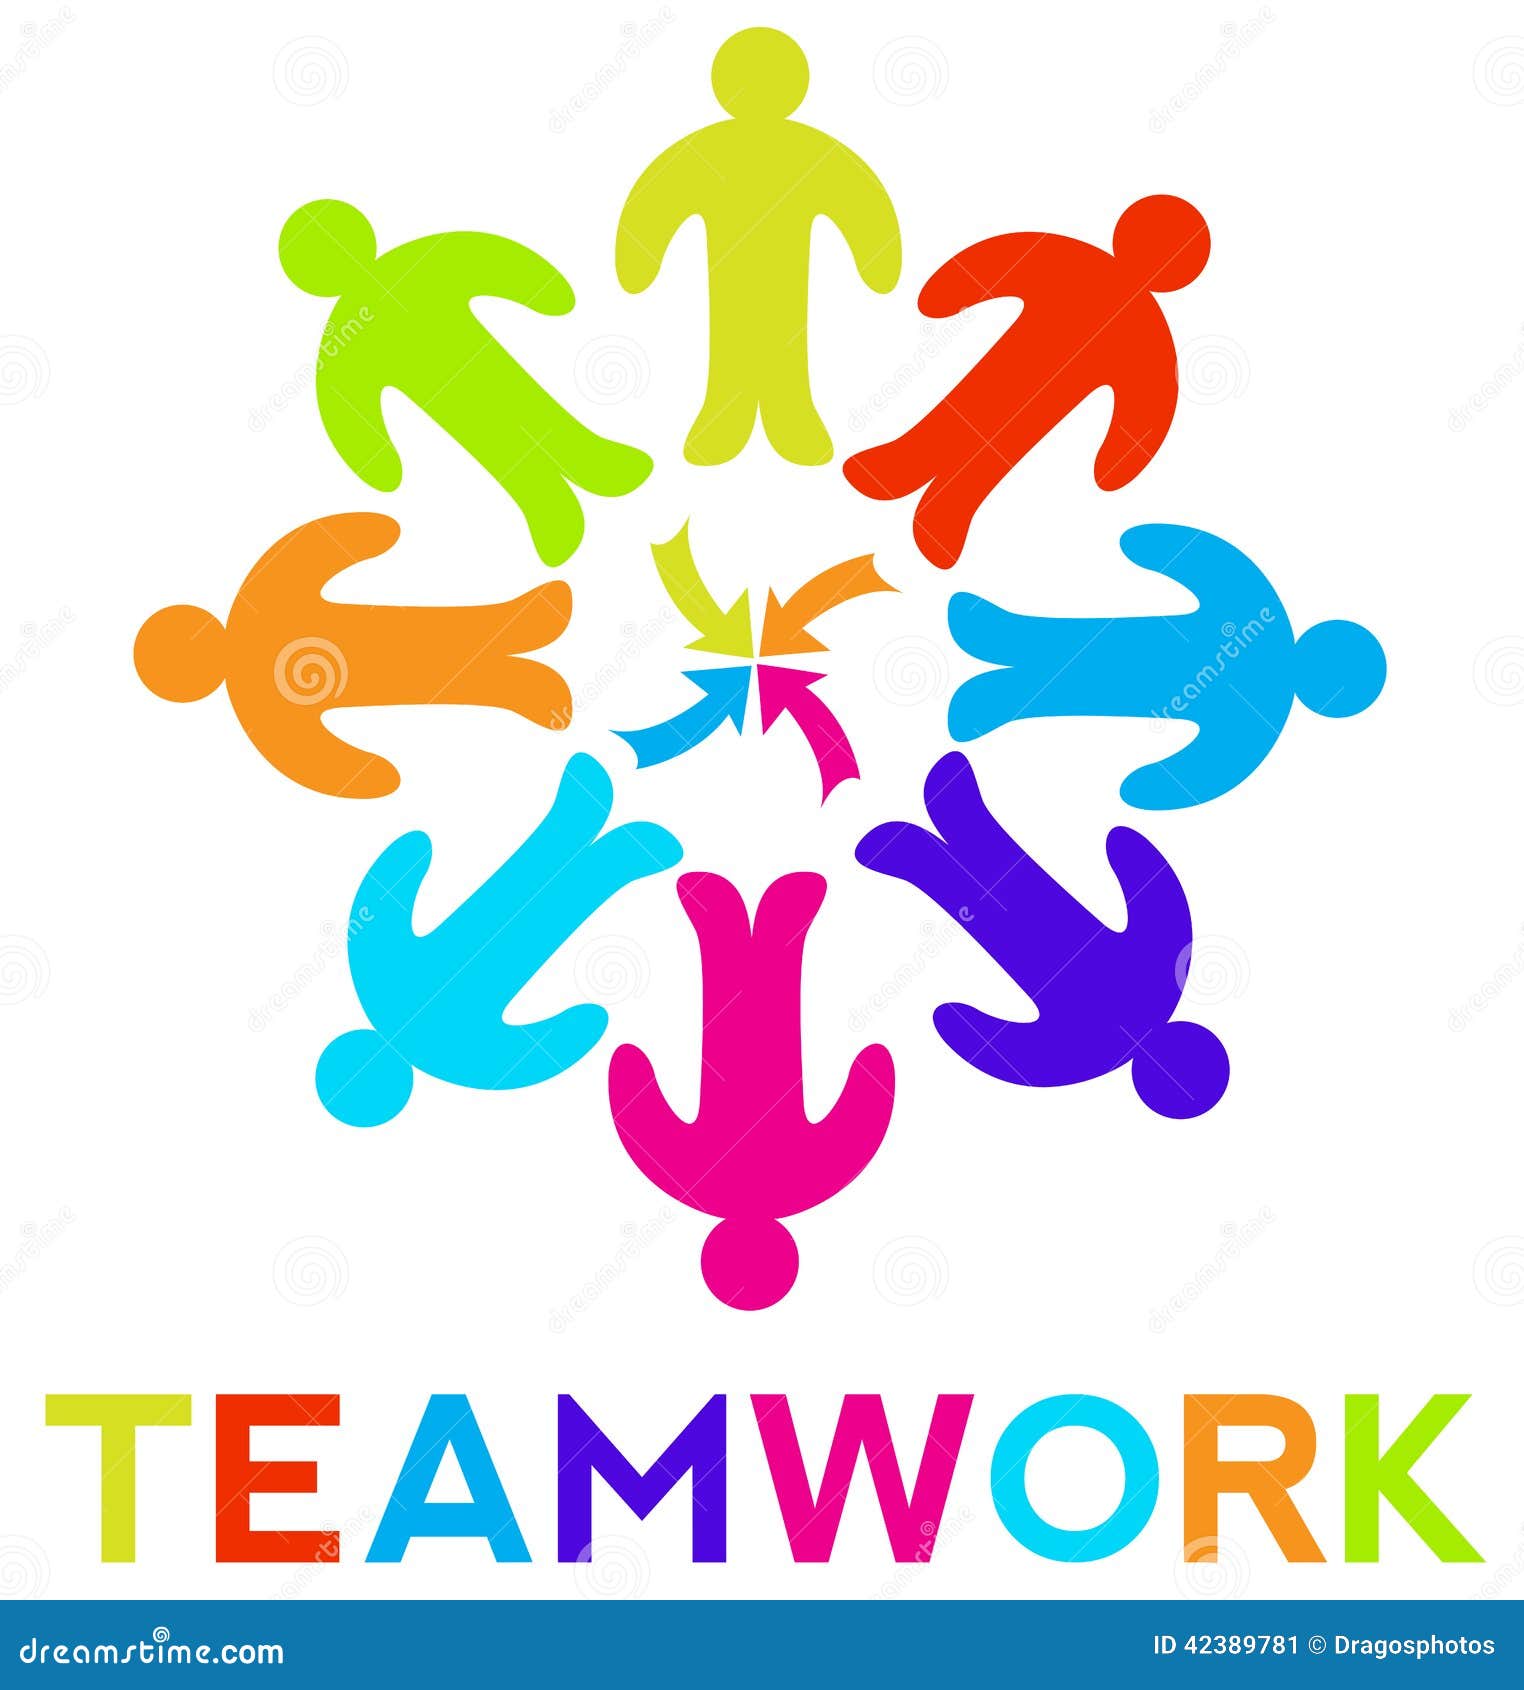 Teamwork stock illustration. Illustration of design, people - 42389781